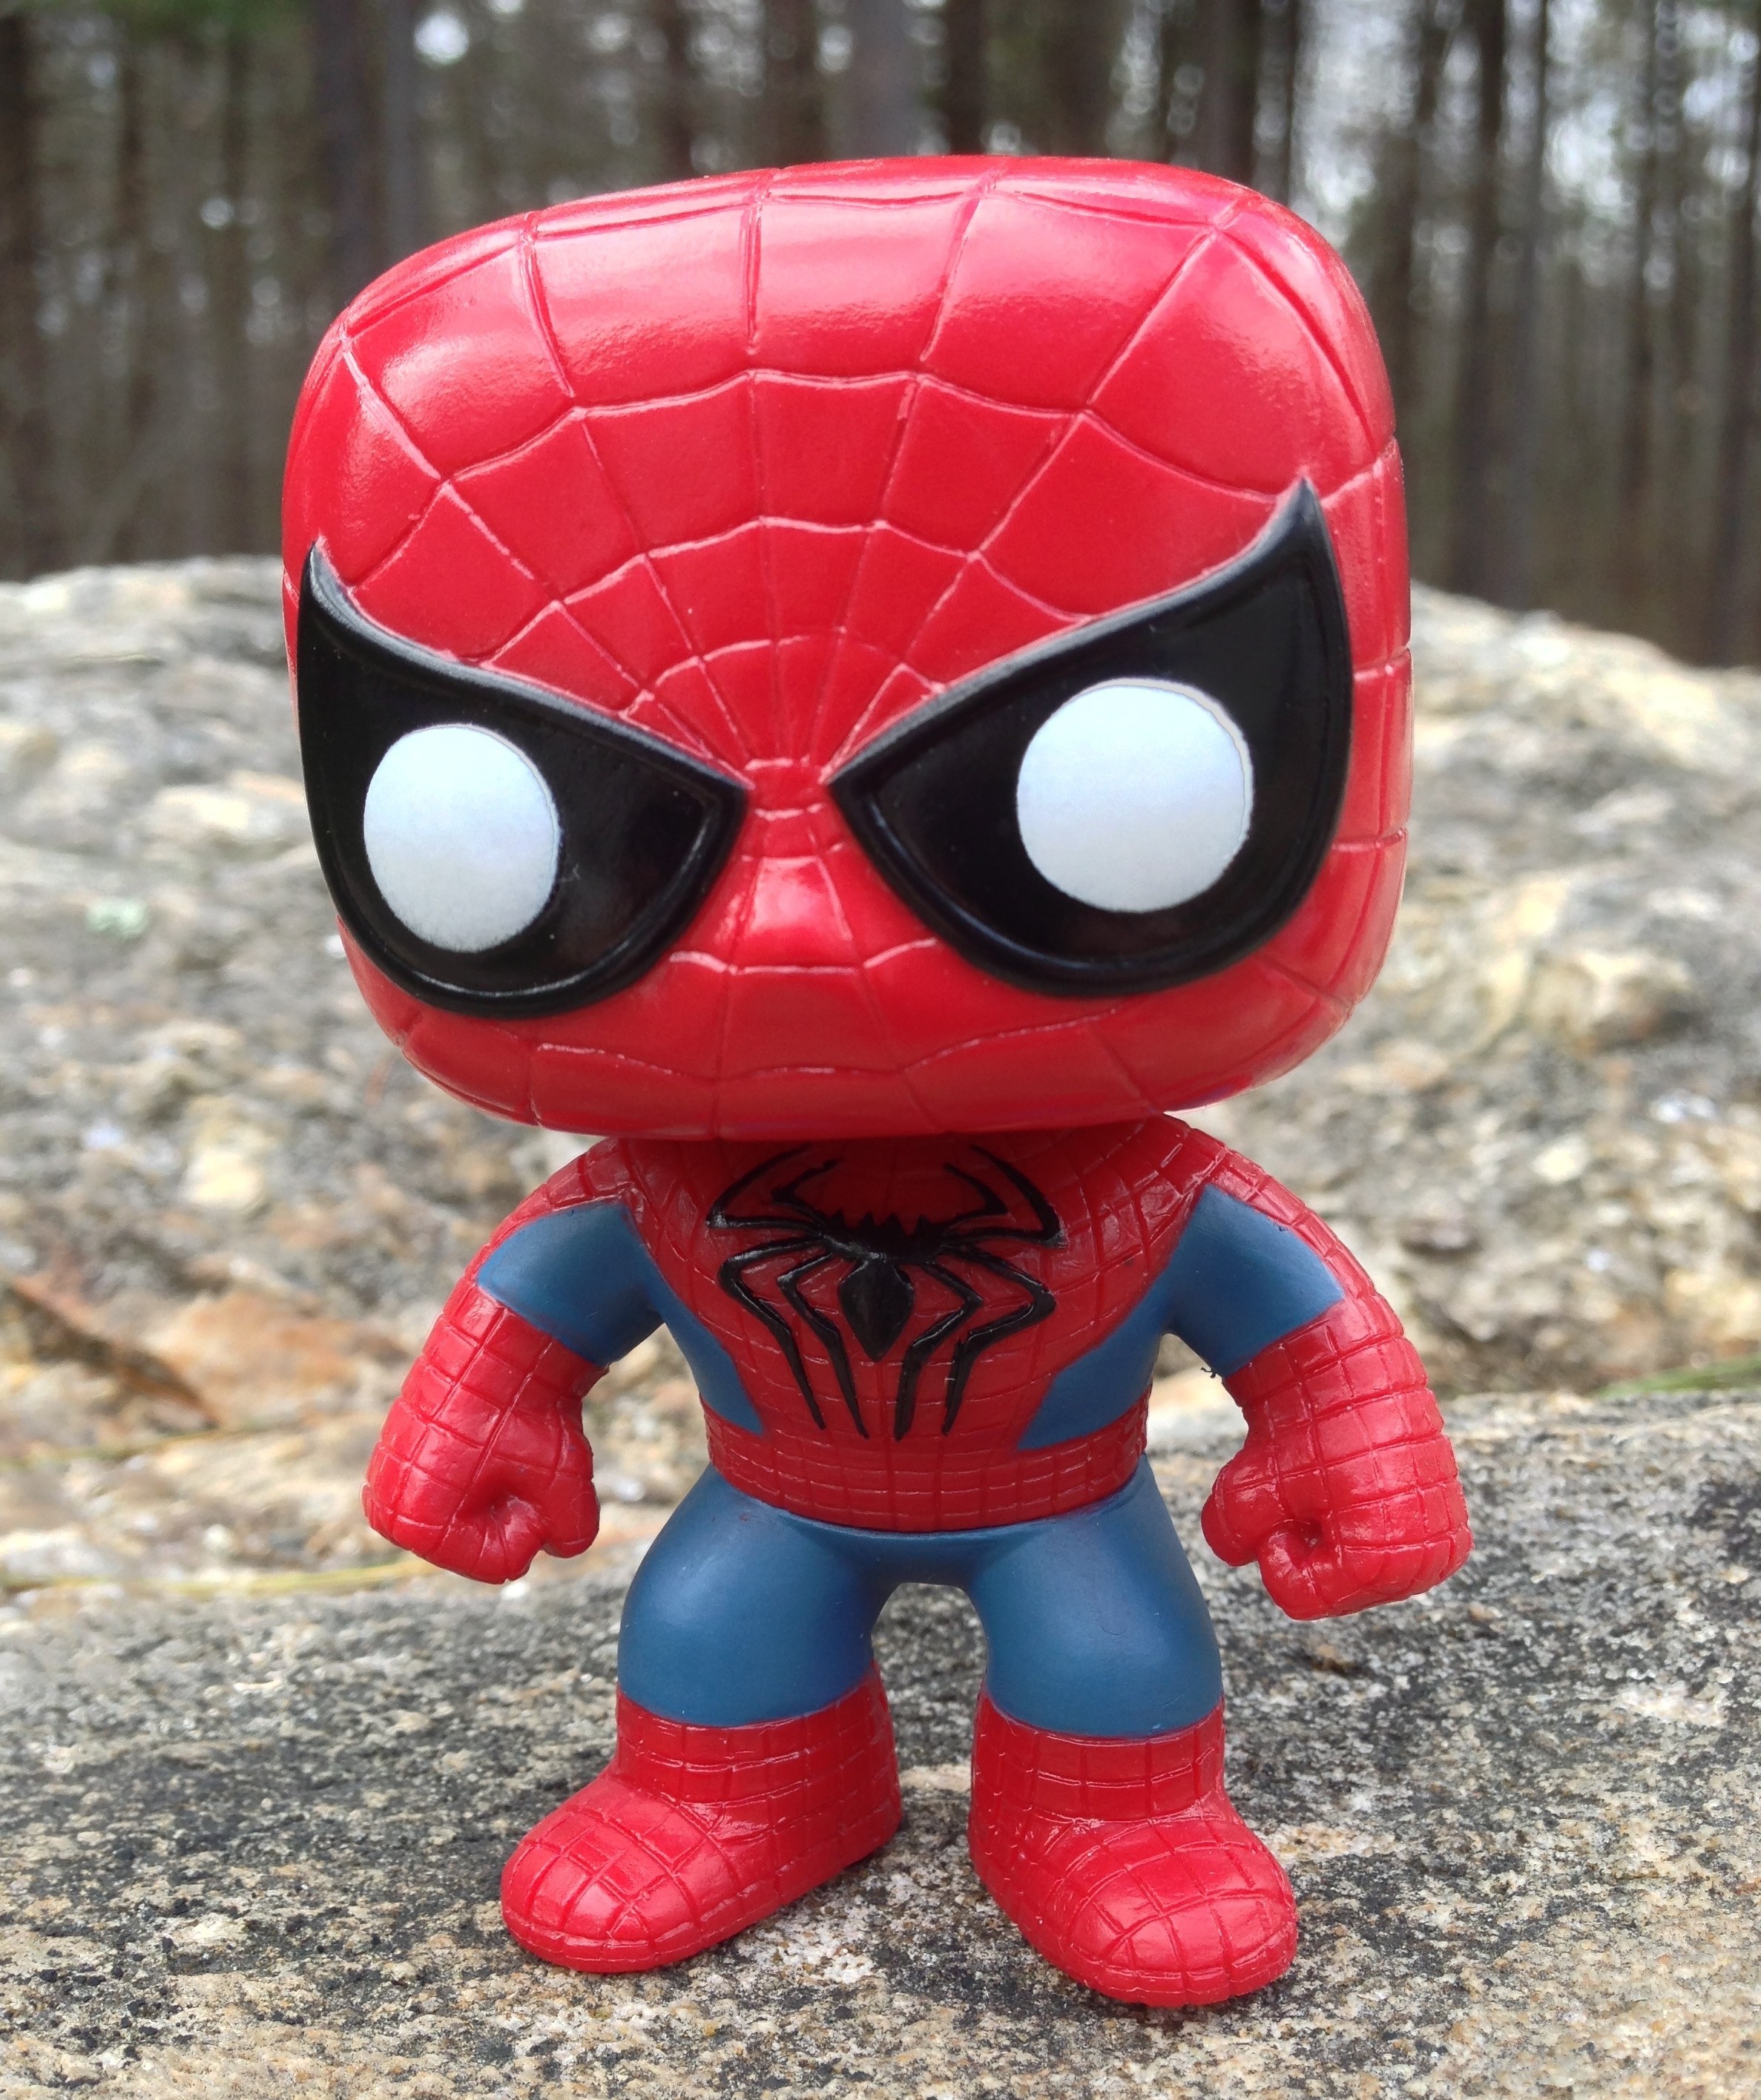 Funko Amazing Spider-Man 2 & Electro POP Vinyls Review - Marvel Toy News